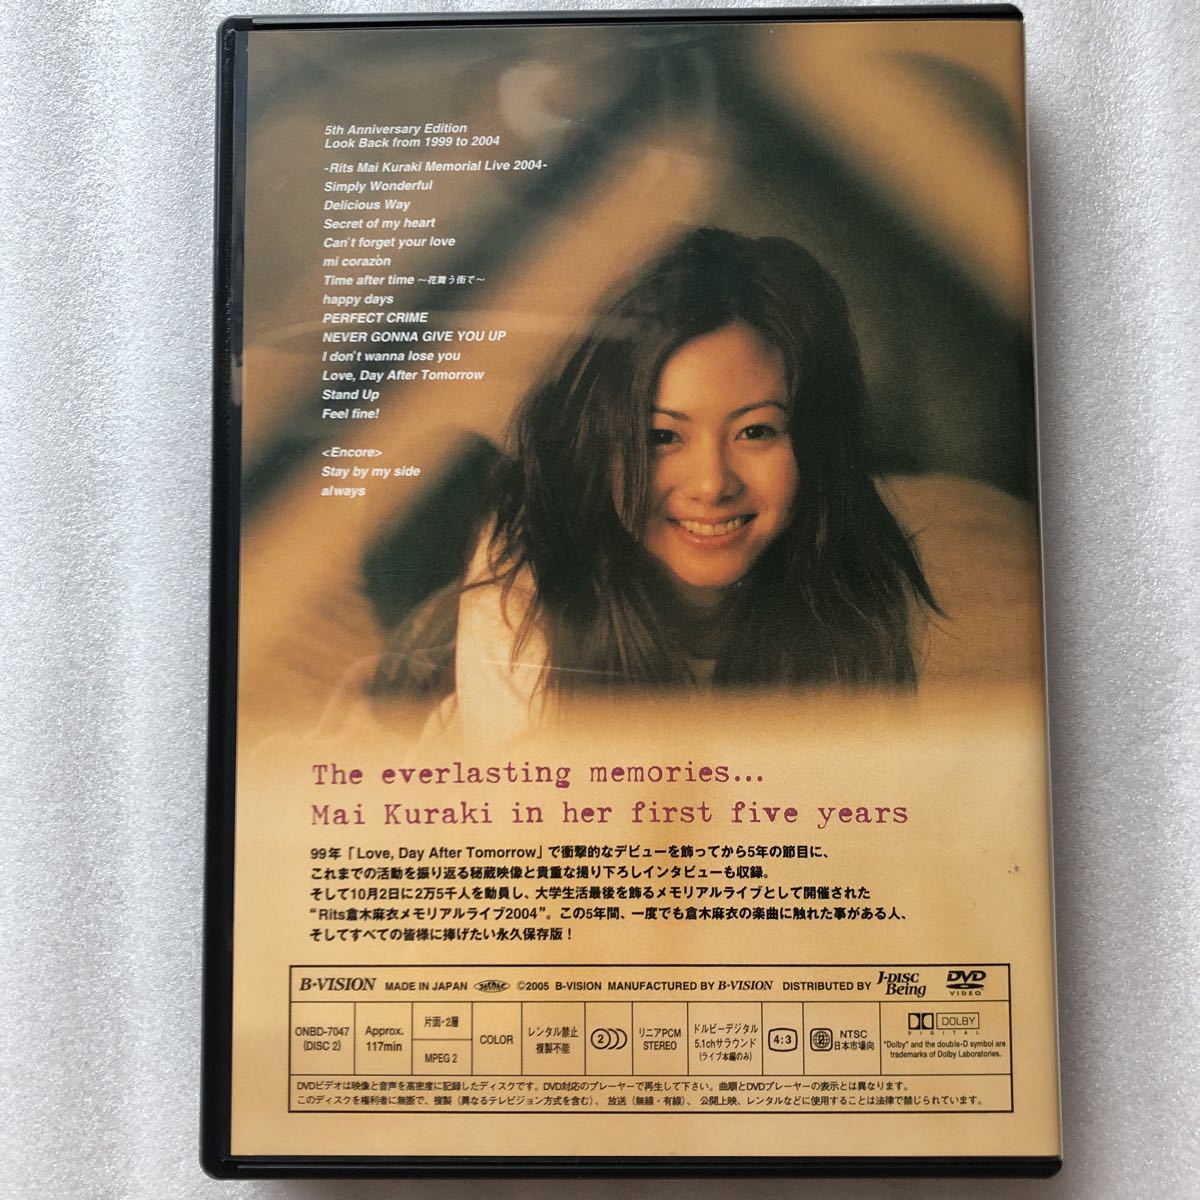 Mai Kuraki 5th Anniversary Edition:GrowStep by Step 中古 DVD 倉木麻衣 2枚組BOX仕様 他多数出品中